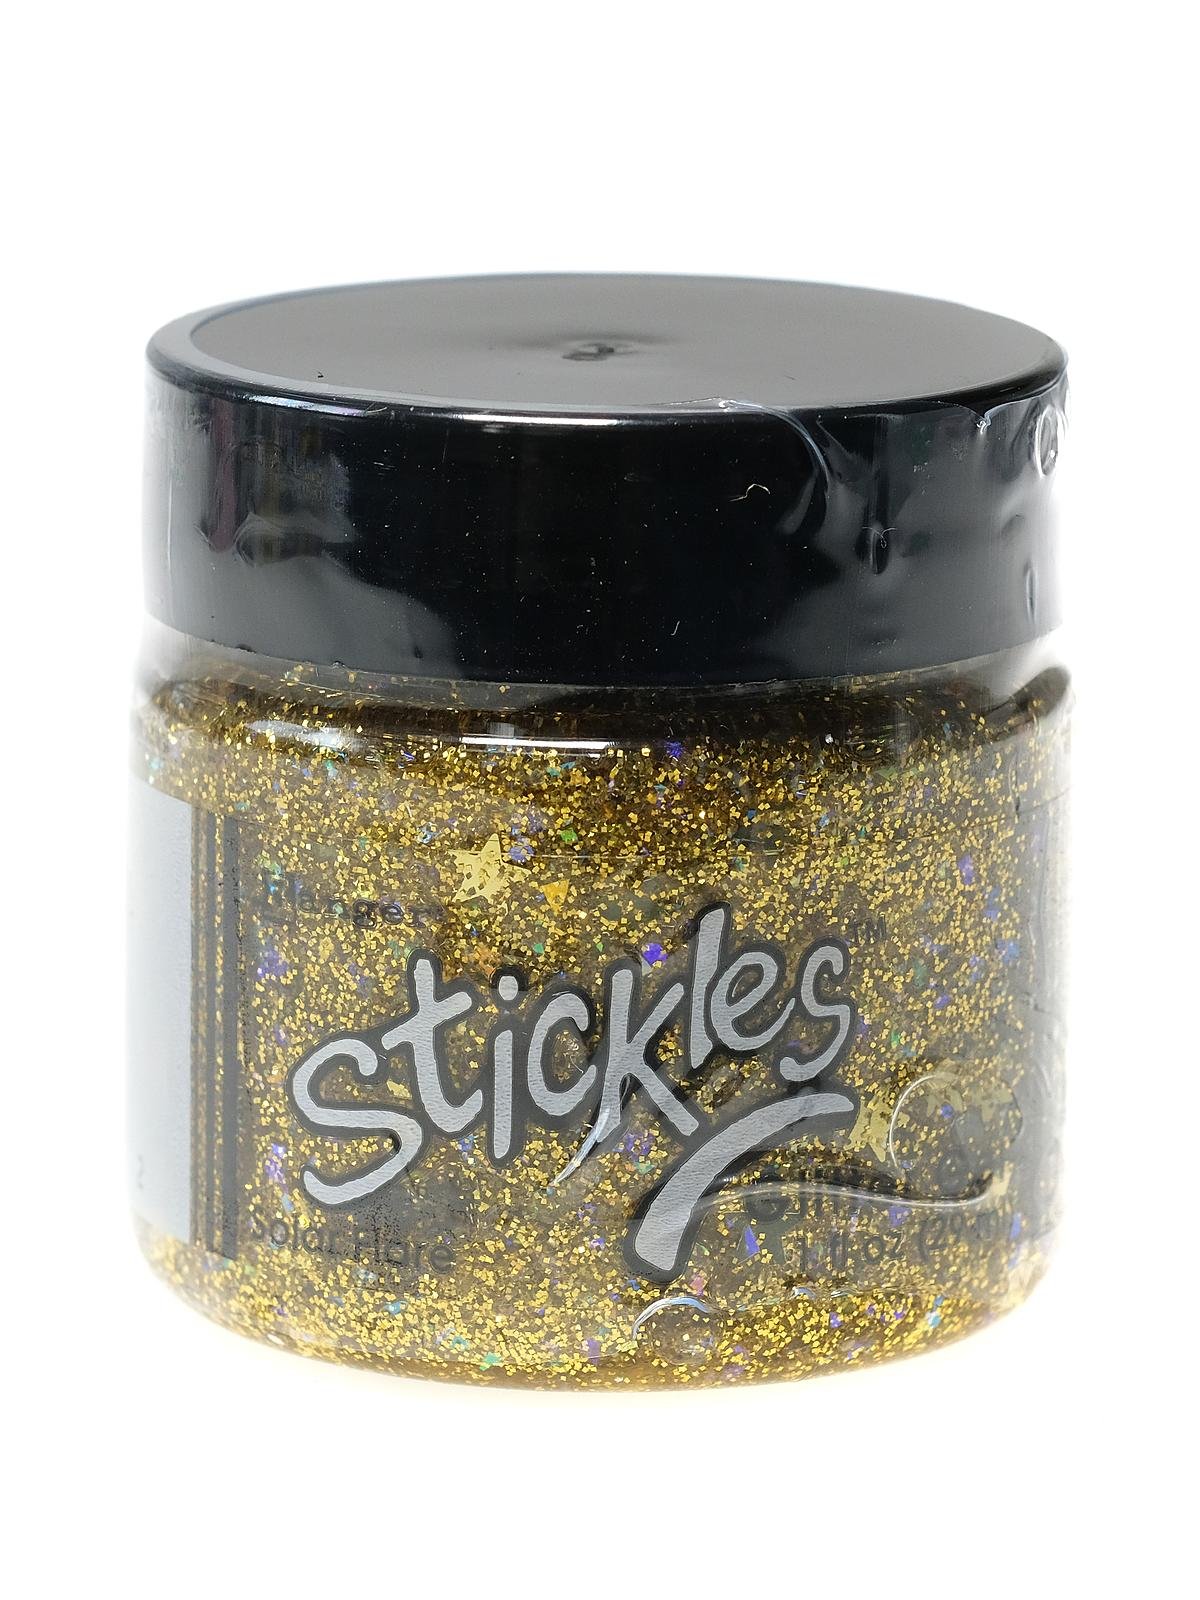 Stickles Glitter Glues & Gels, Ranger